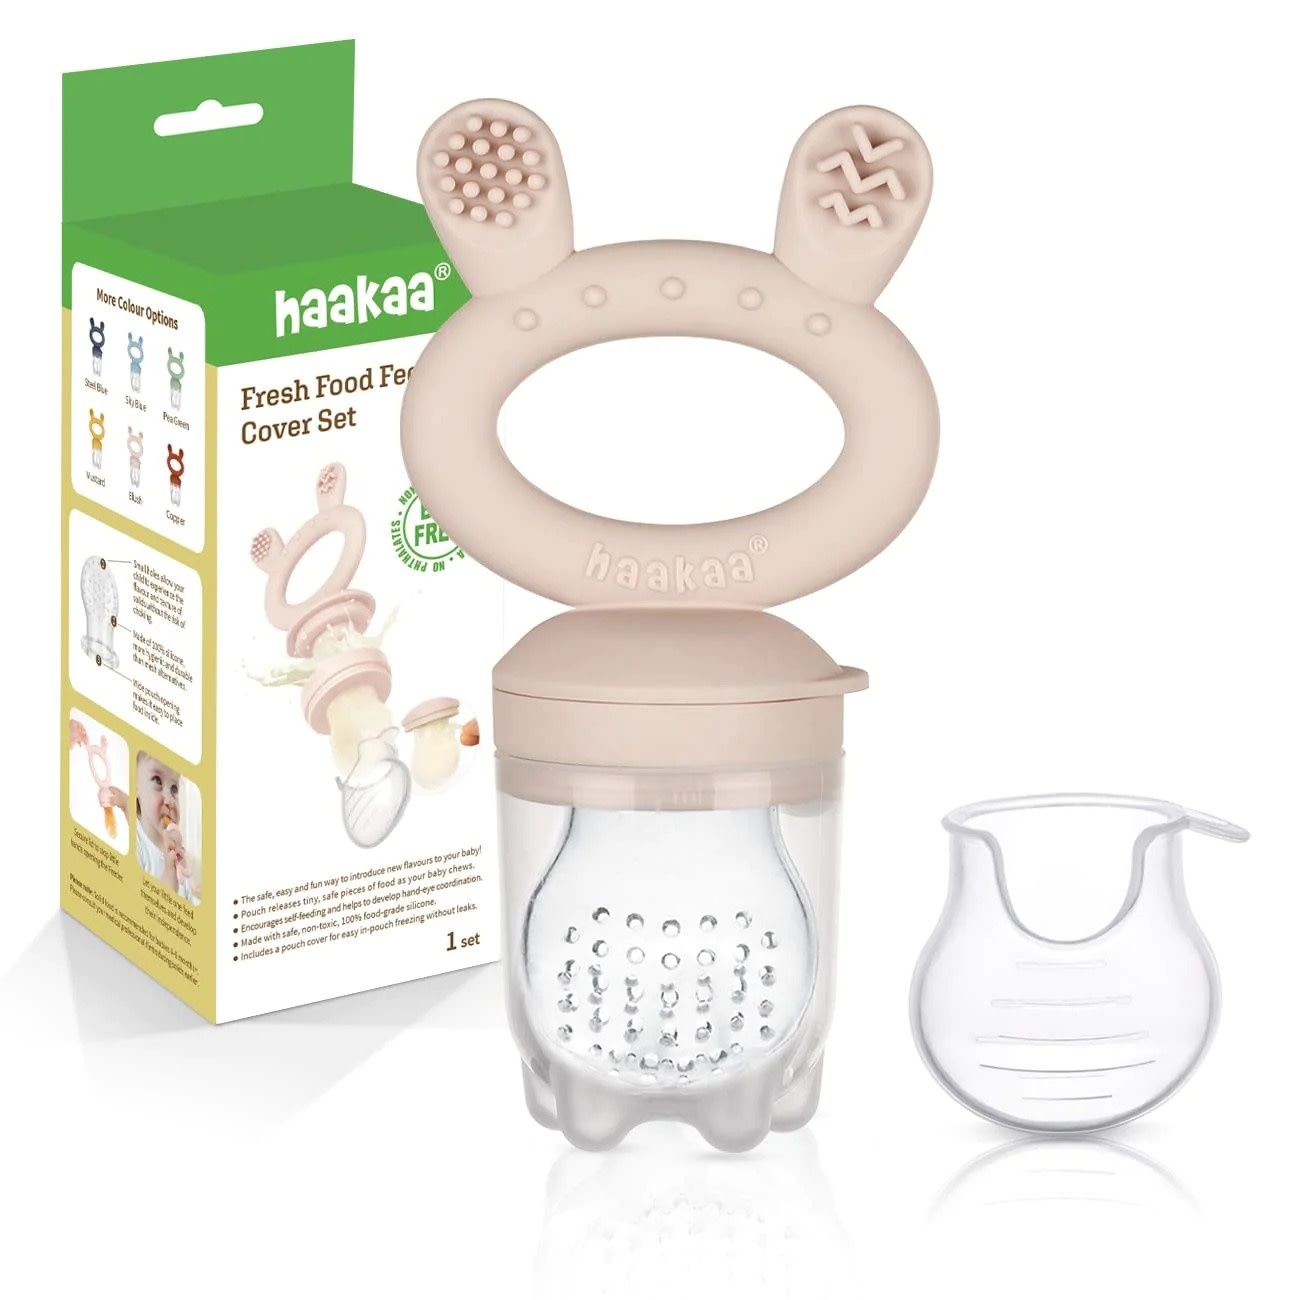 HNTOB 55pcs/box medical baby gourd ear disposable clean cotton